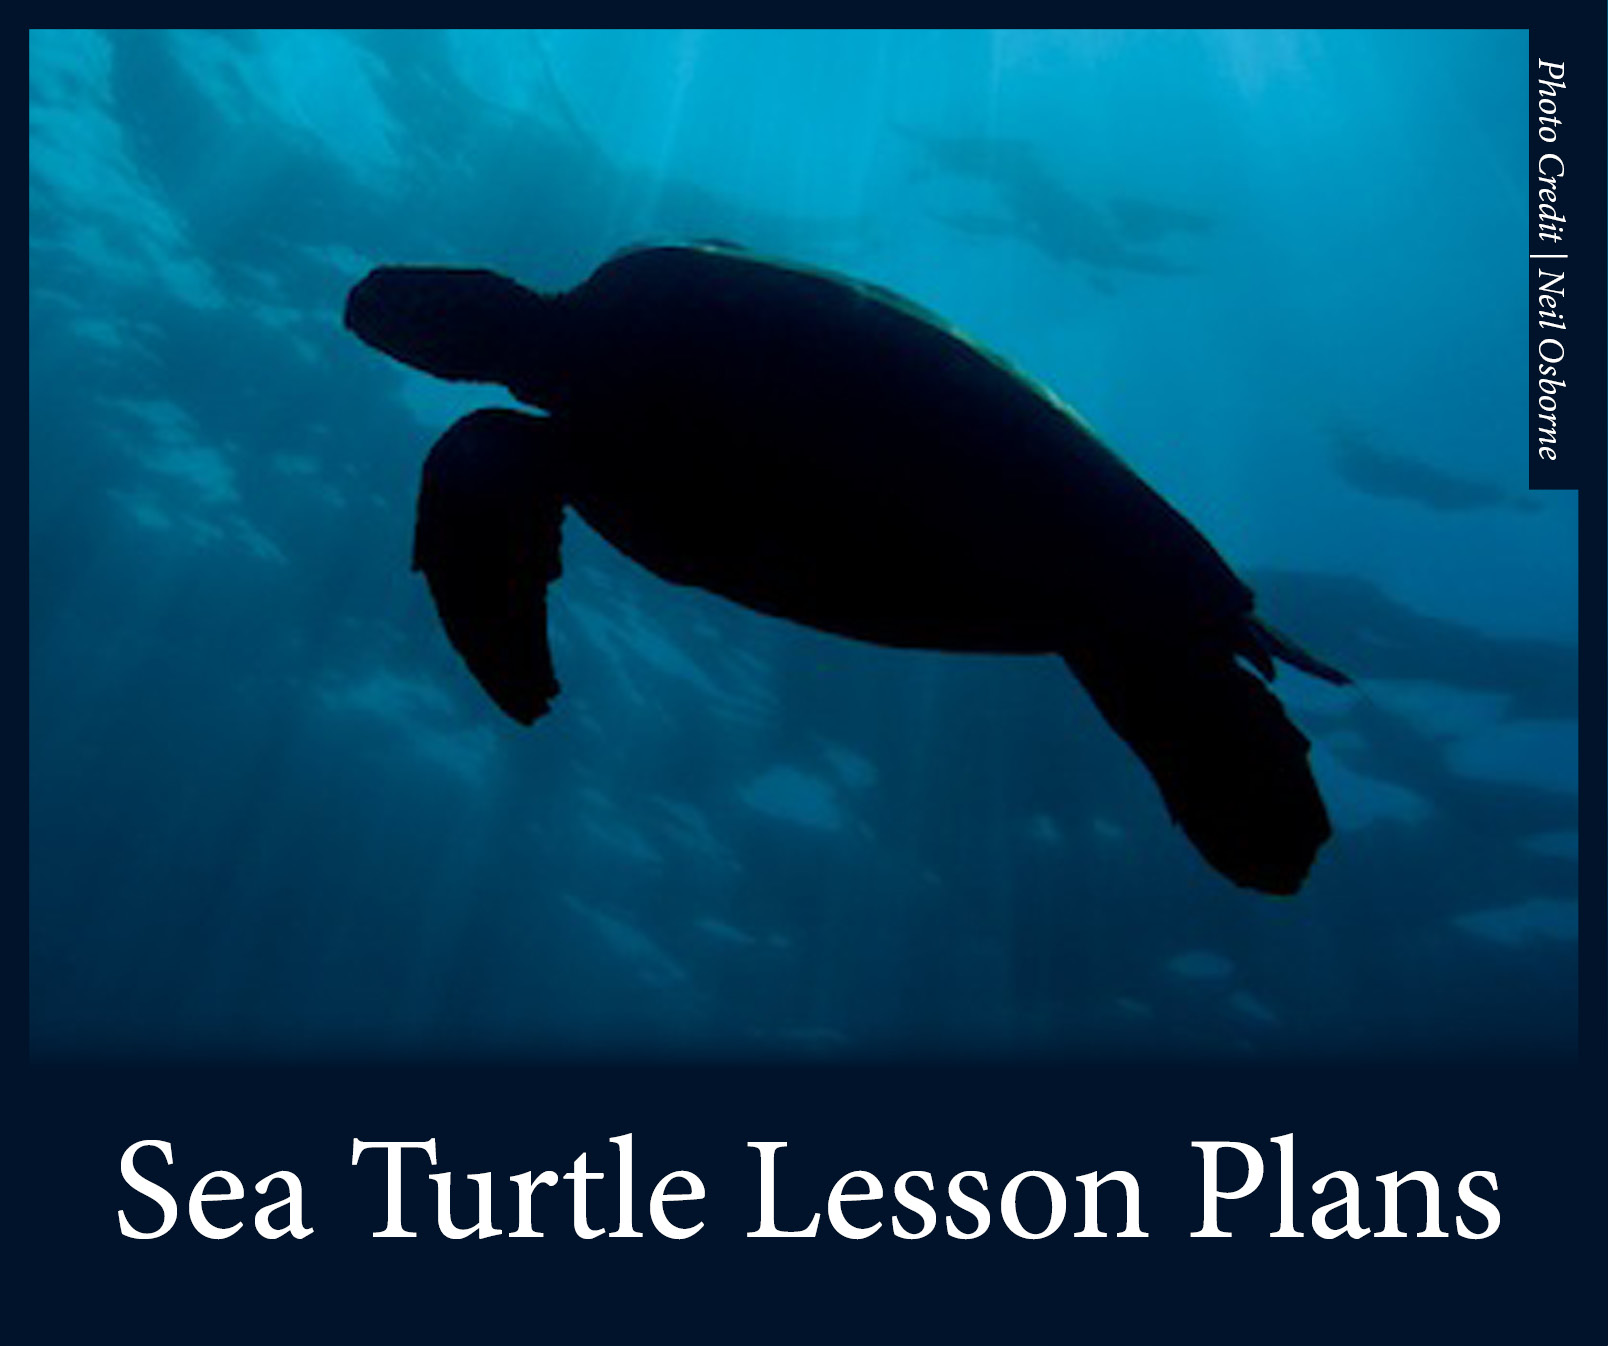 Sea Turtle Lesson Plans 2.jpg